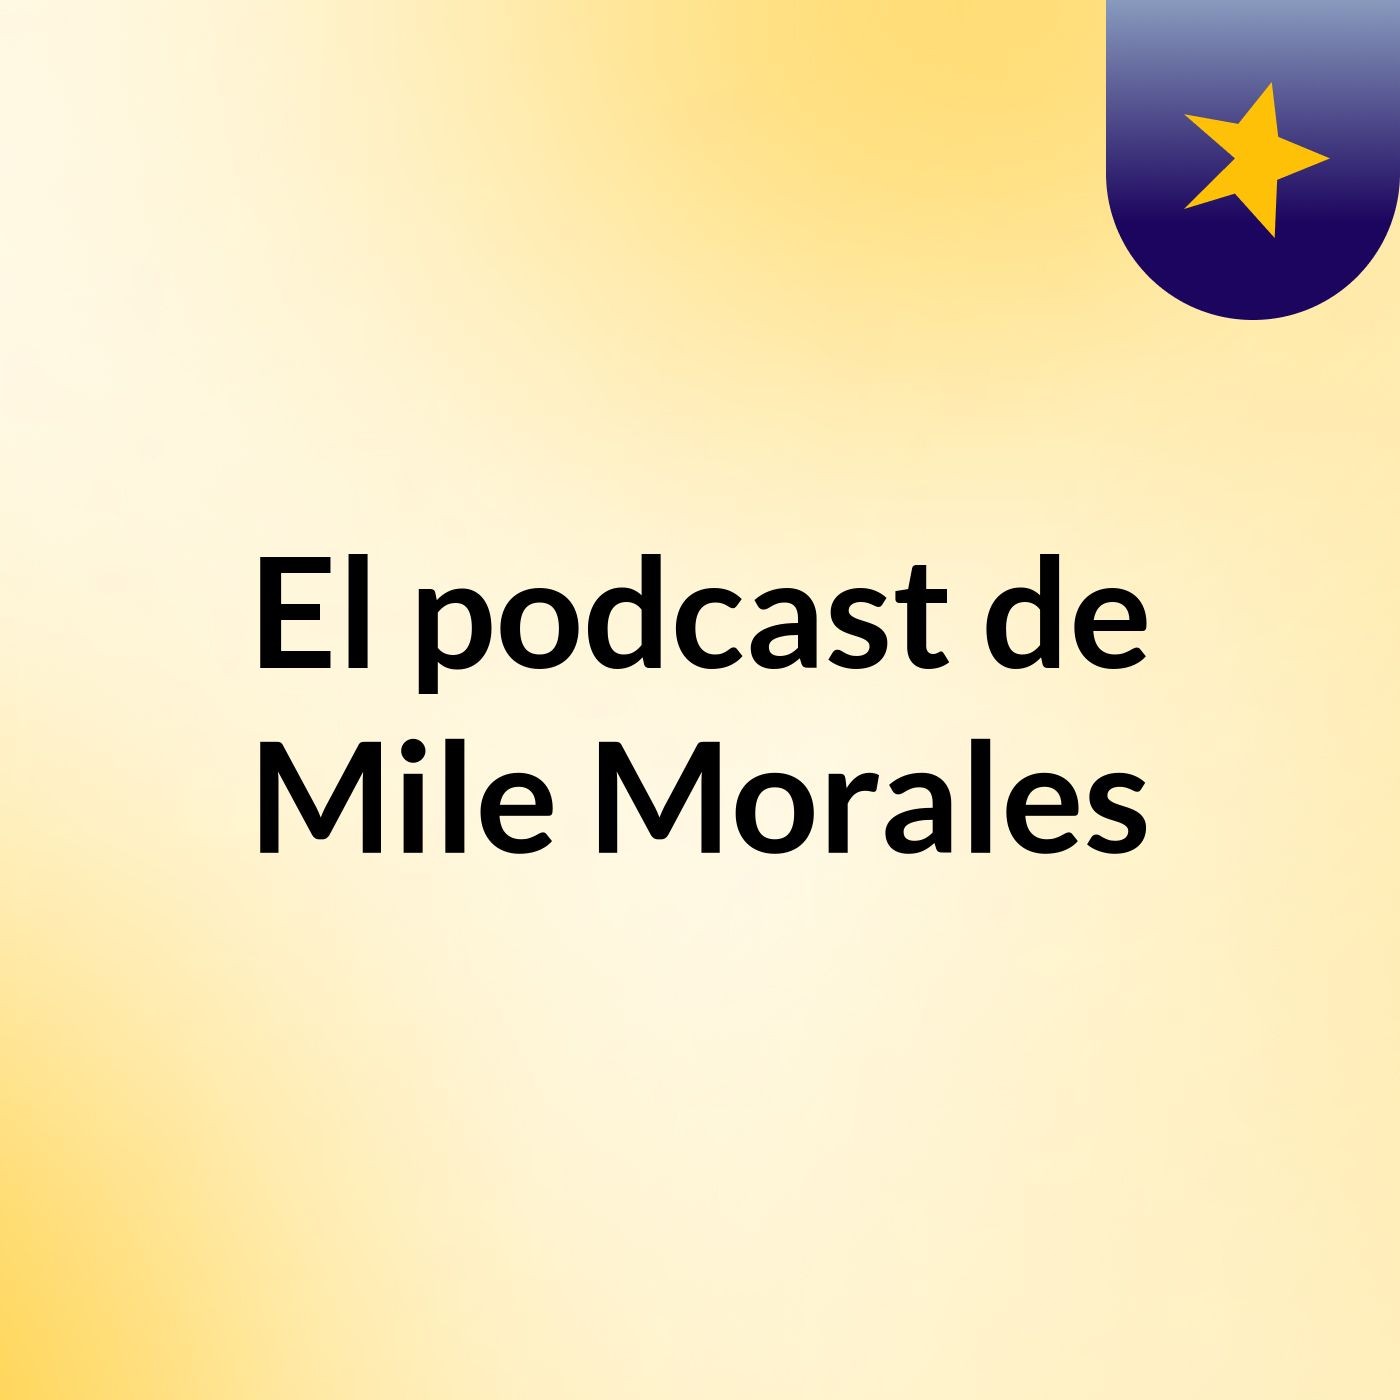 El podcast de Mile Morales